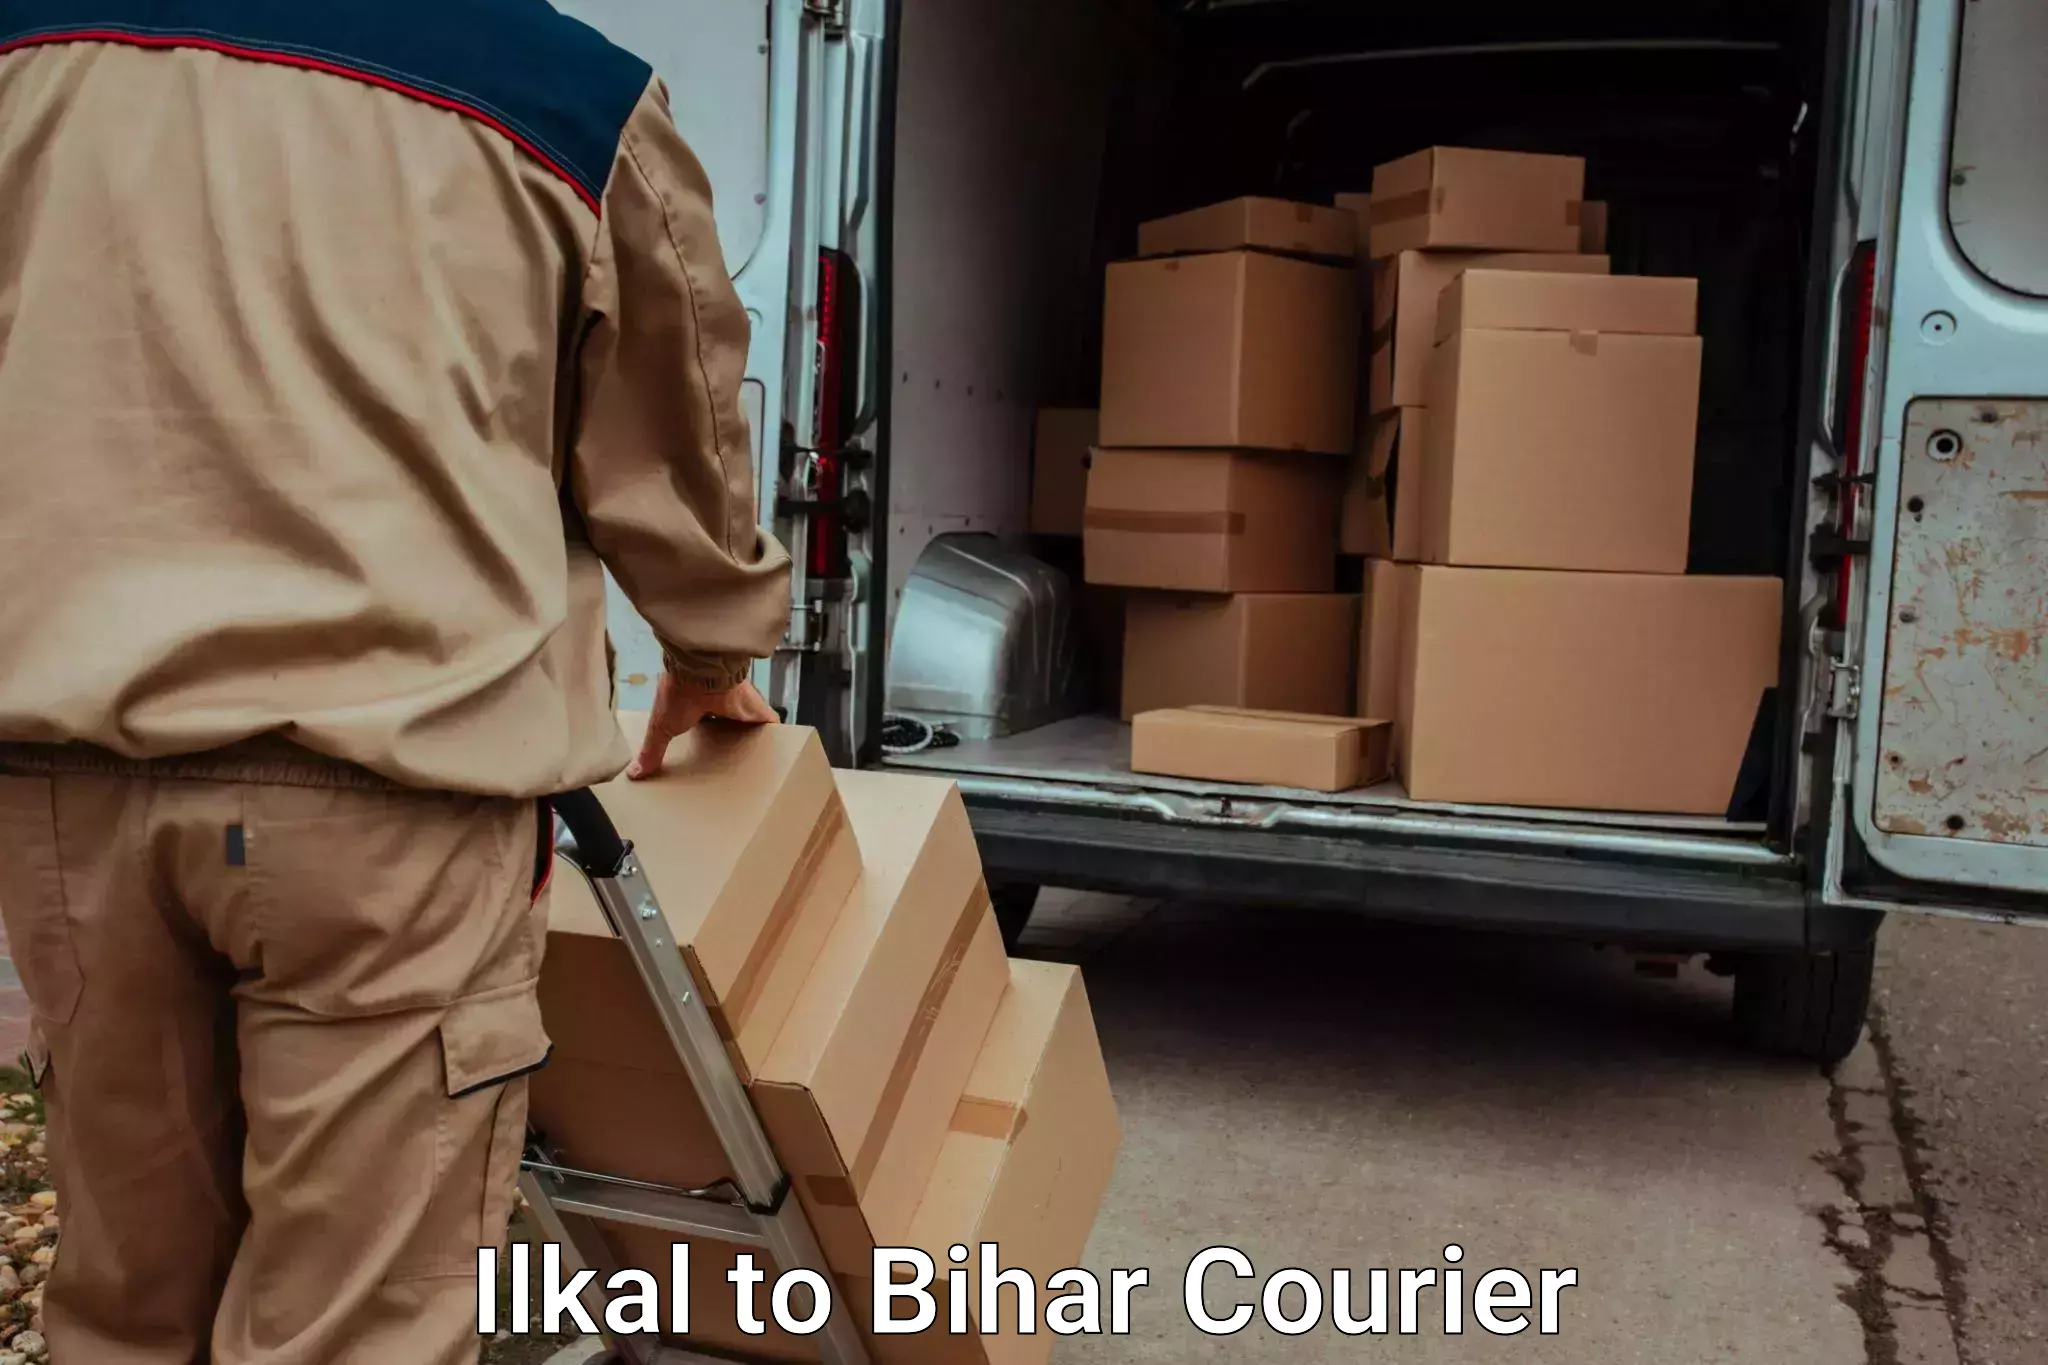 Emergency baggage service Ilkal to Bihar